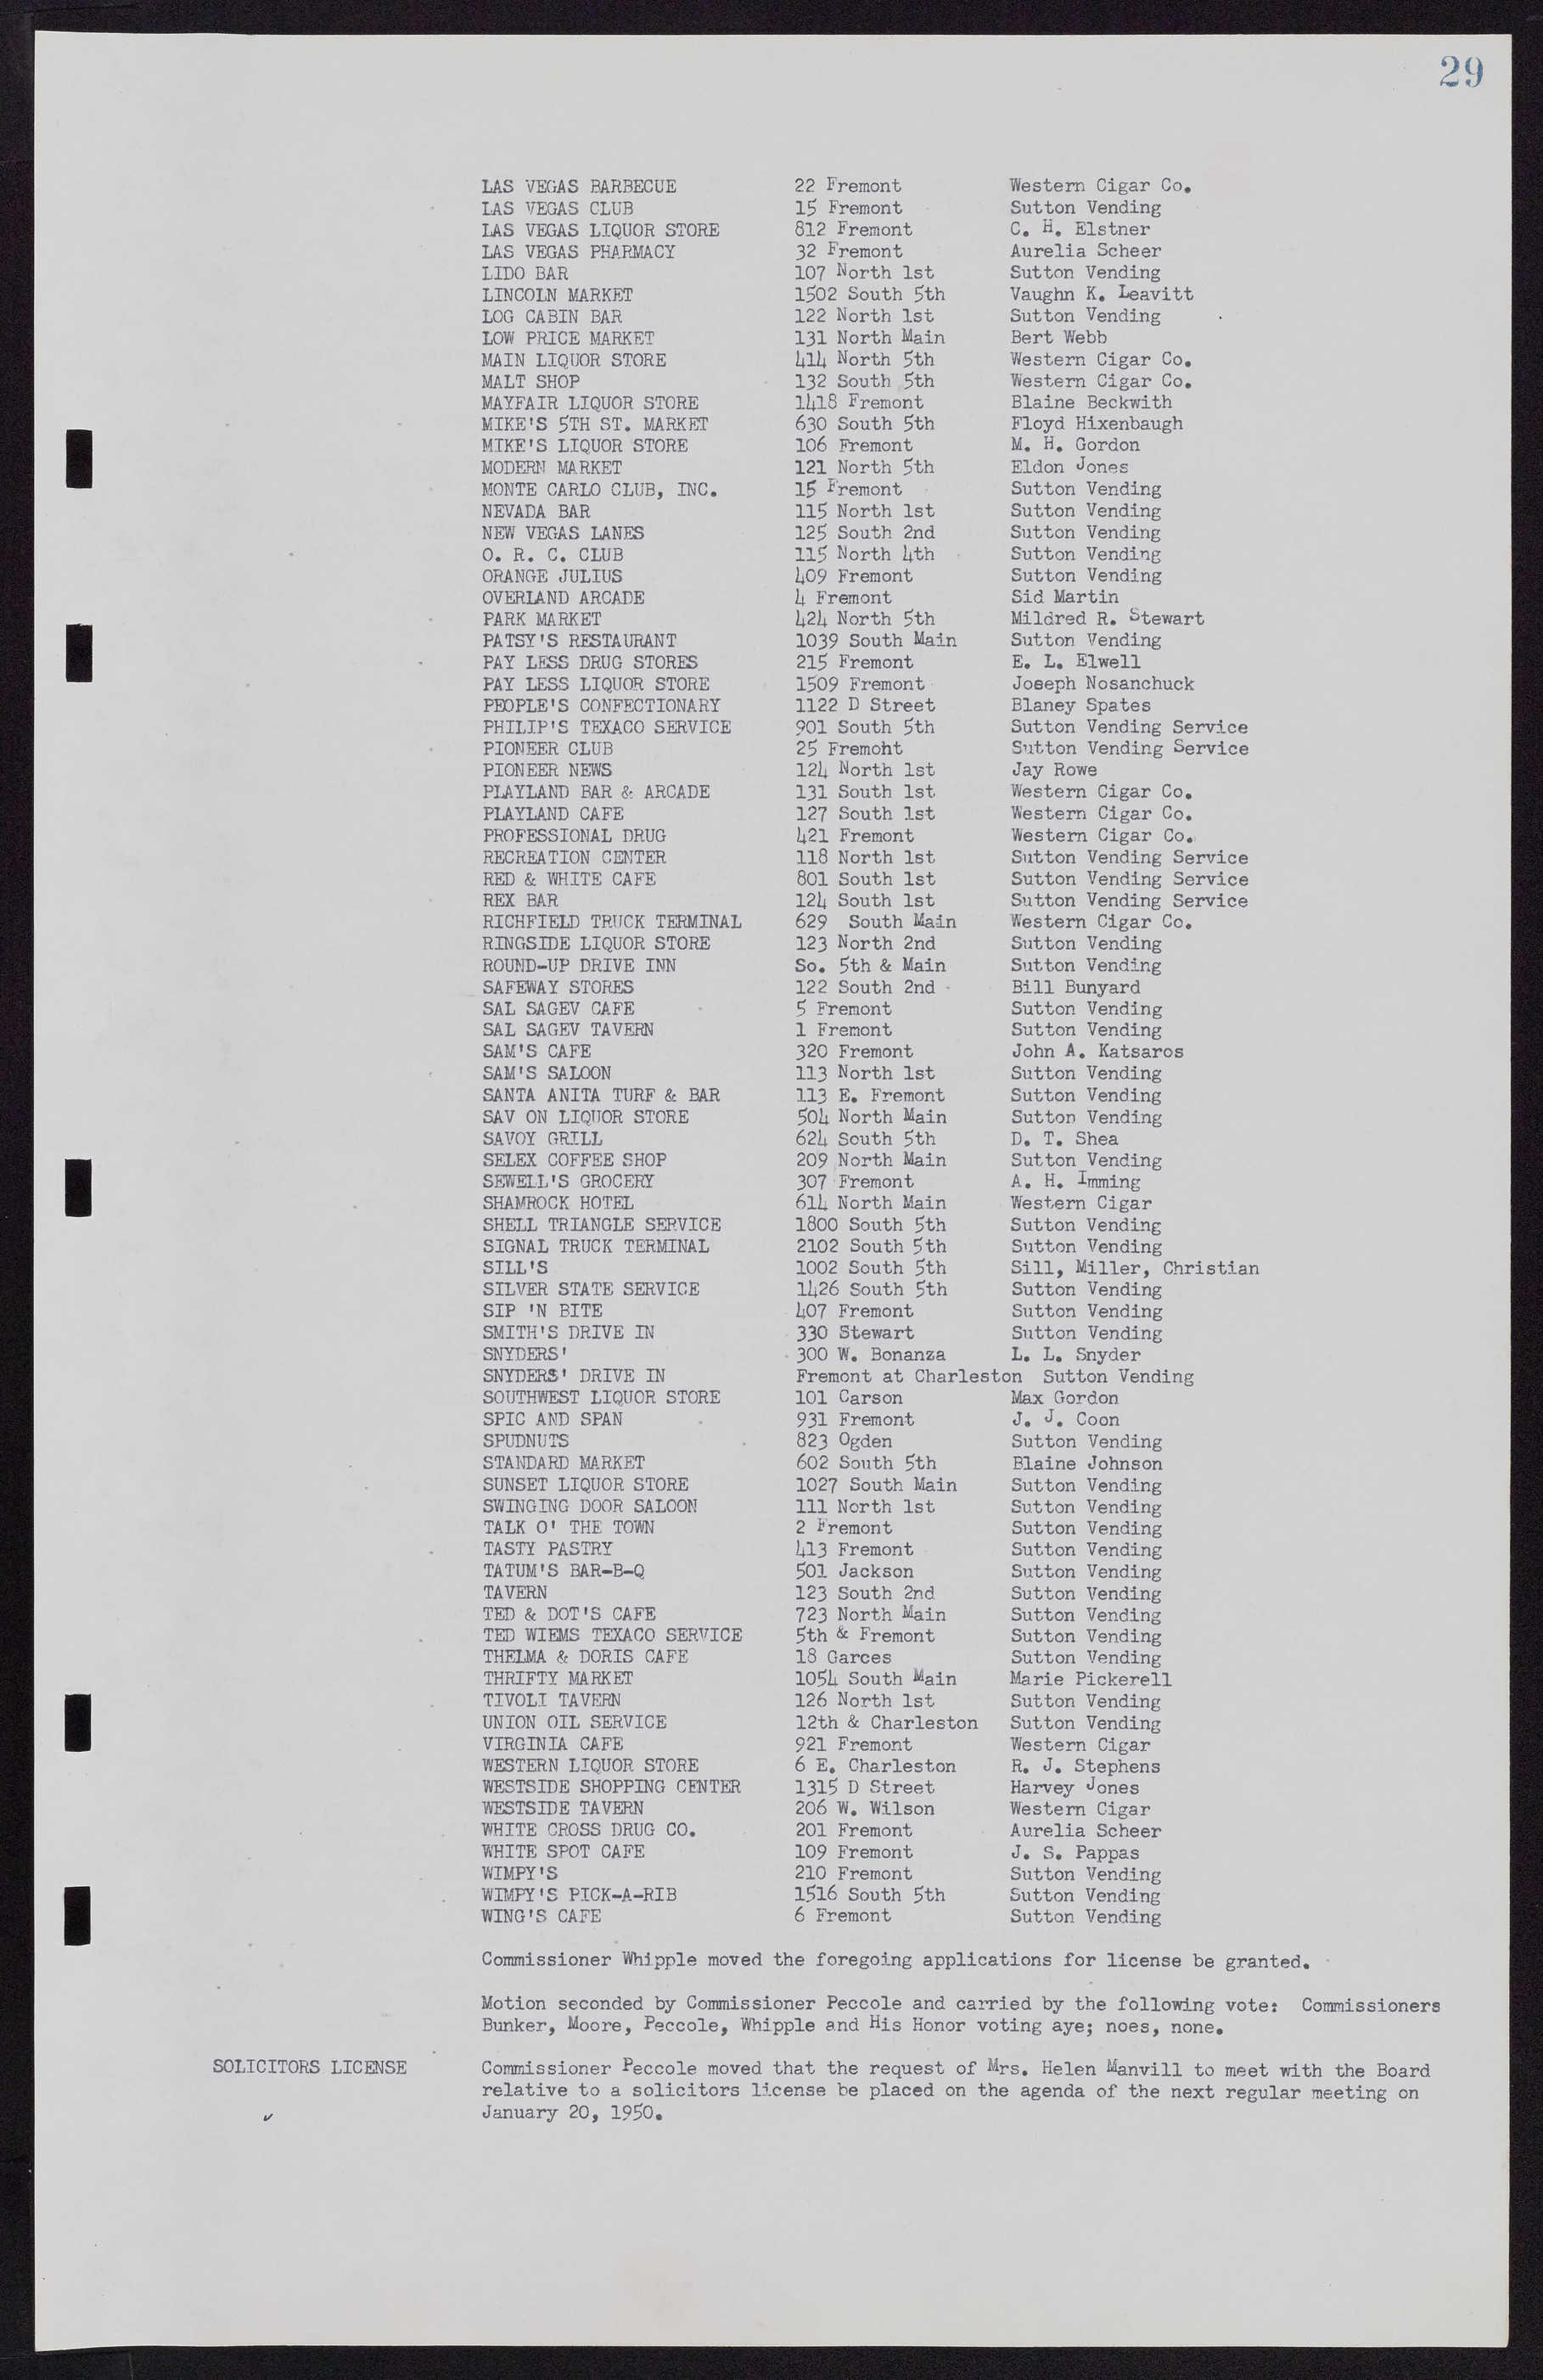 Las Vegas City Commission Minutes, November 7, 1949 to May 21, 1952, lvc000007-37